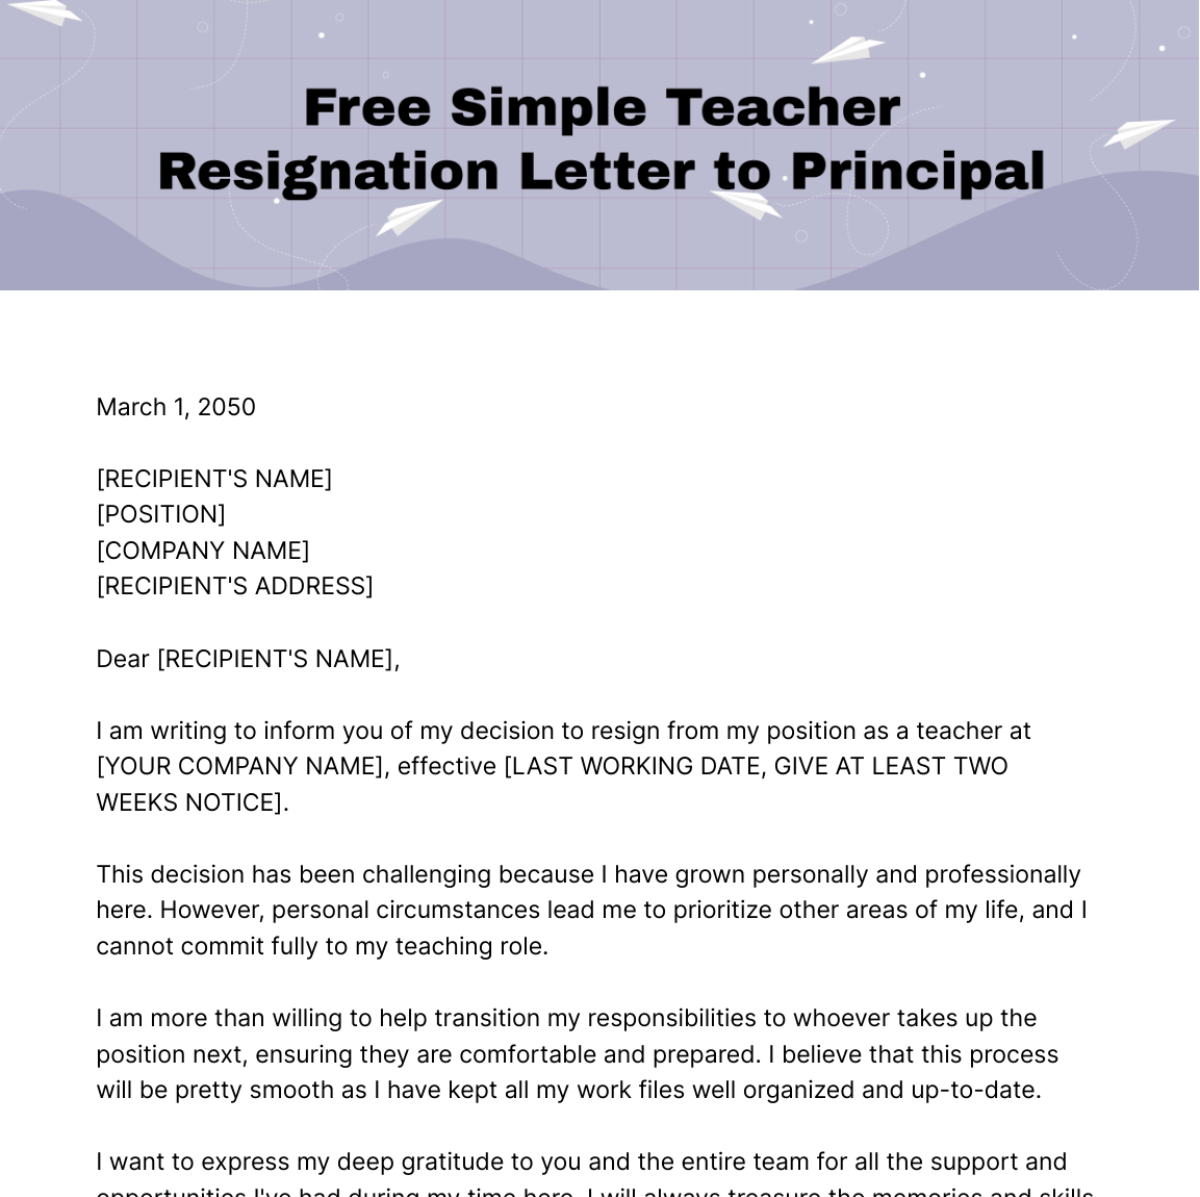 Simple Teacher Resignation Letter to Principal Template